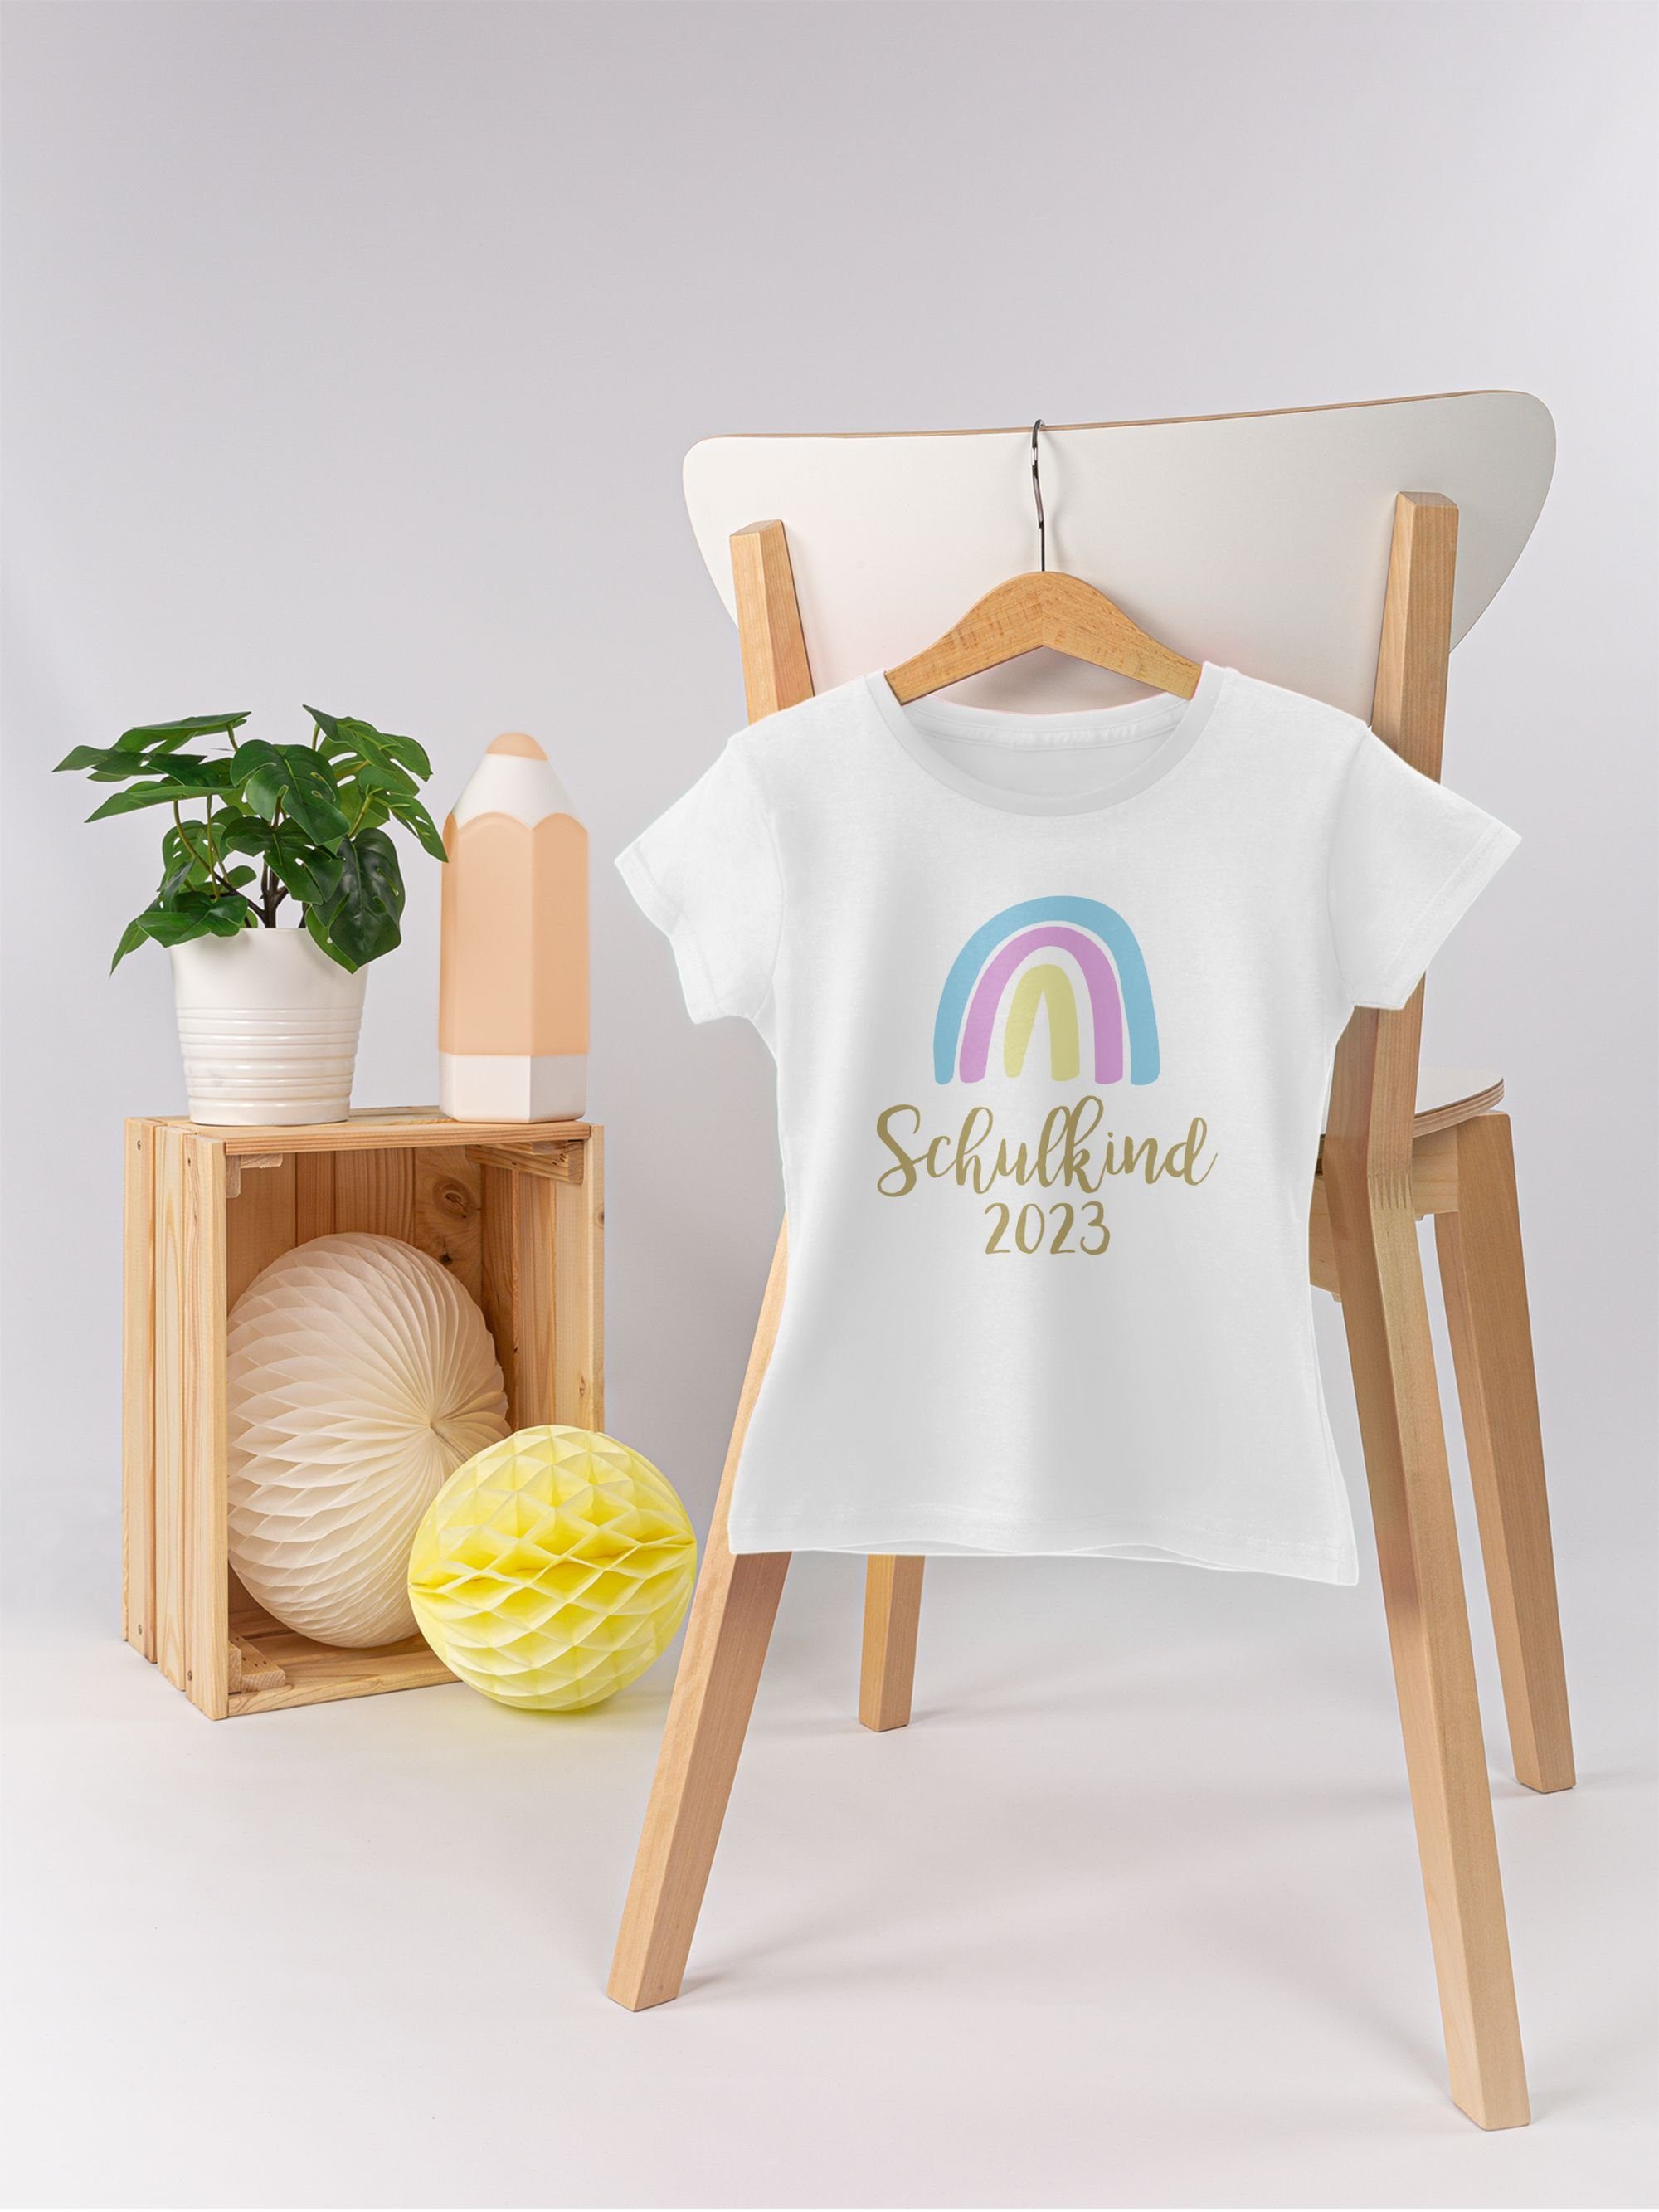 Shirtracer T-Shirt Gold / 2023 Einschulung 1 Pastell Weiß Mädchen Schulkind Regenbogen